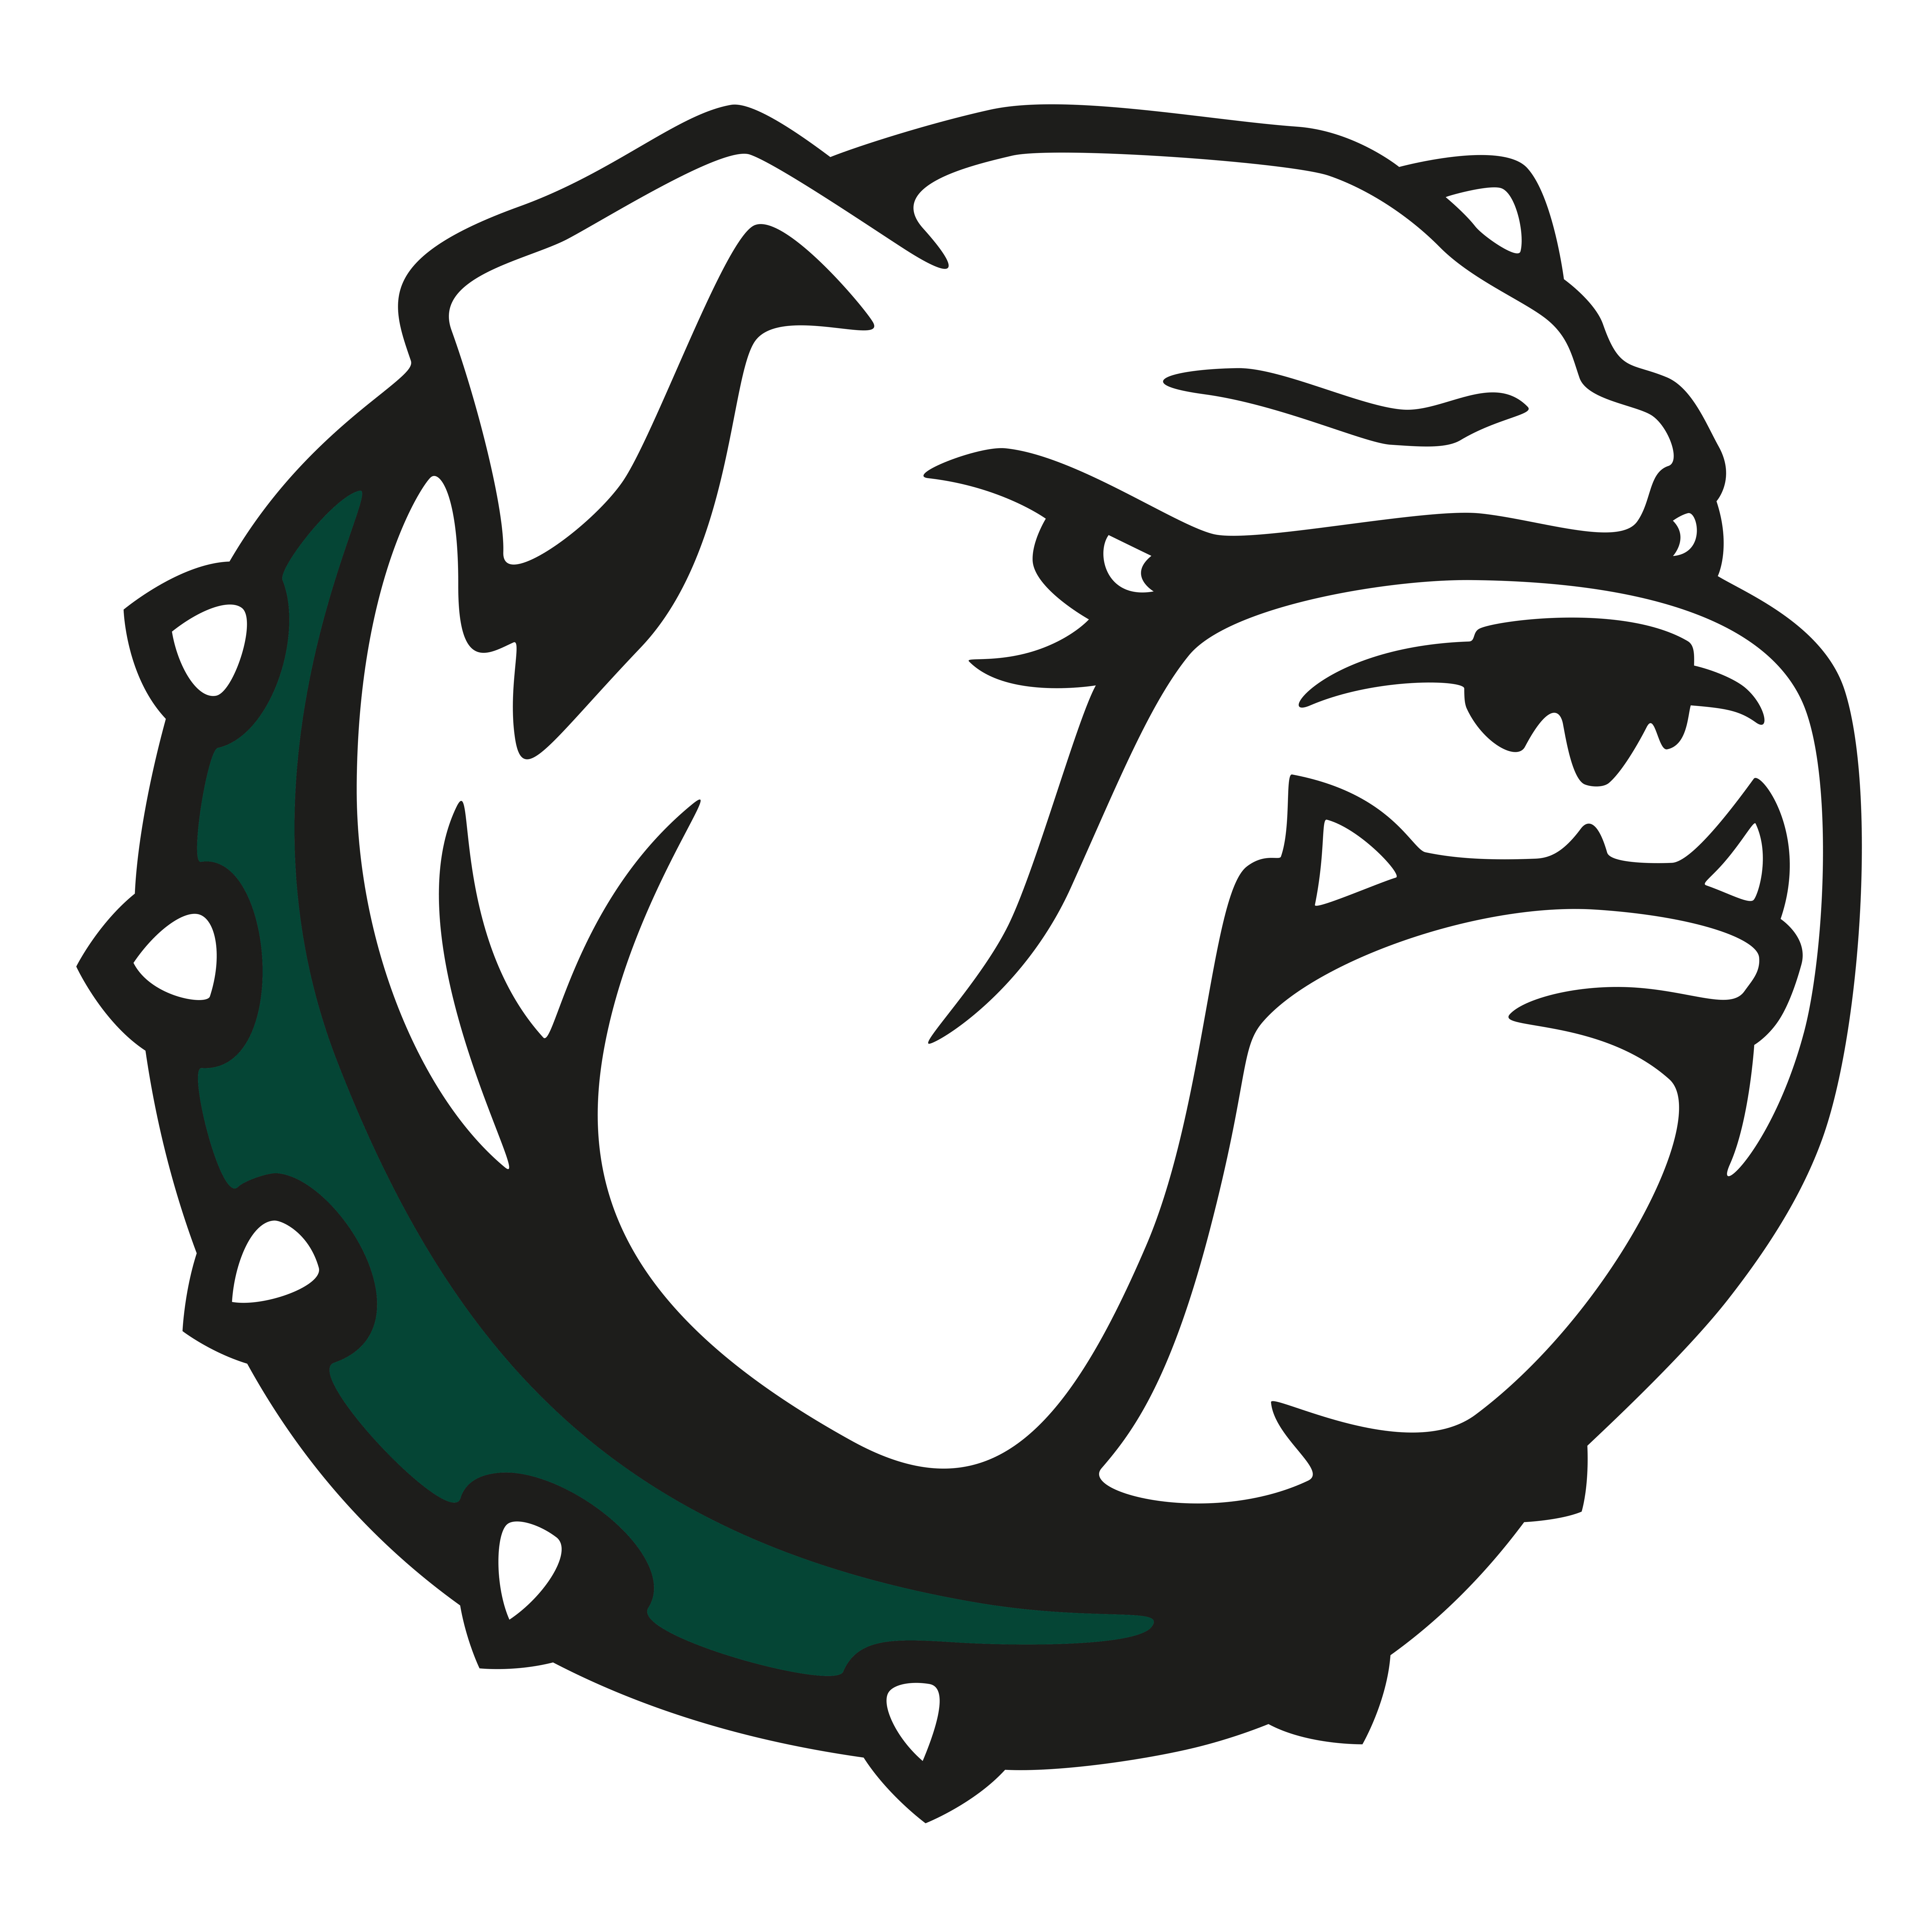 Bulldog Mascot for the Athletics Department